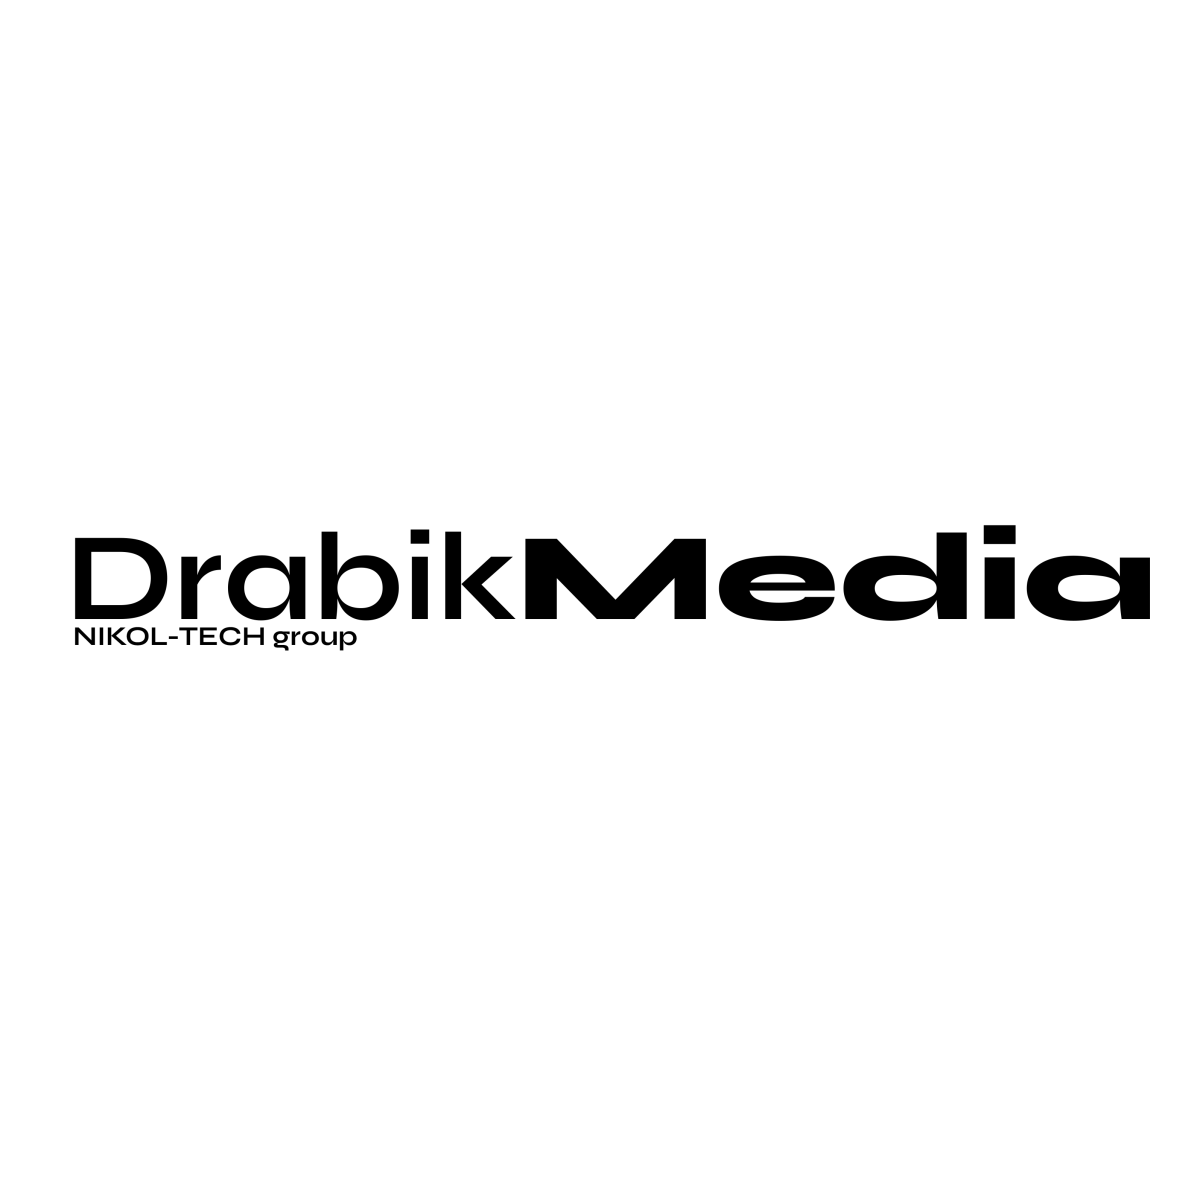 DrabikMedia